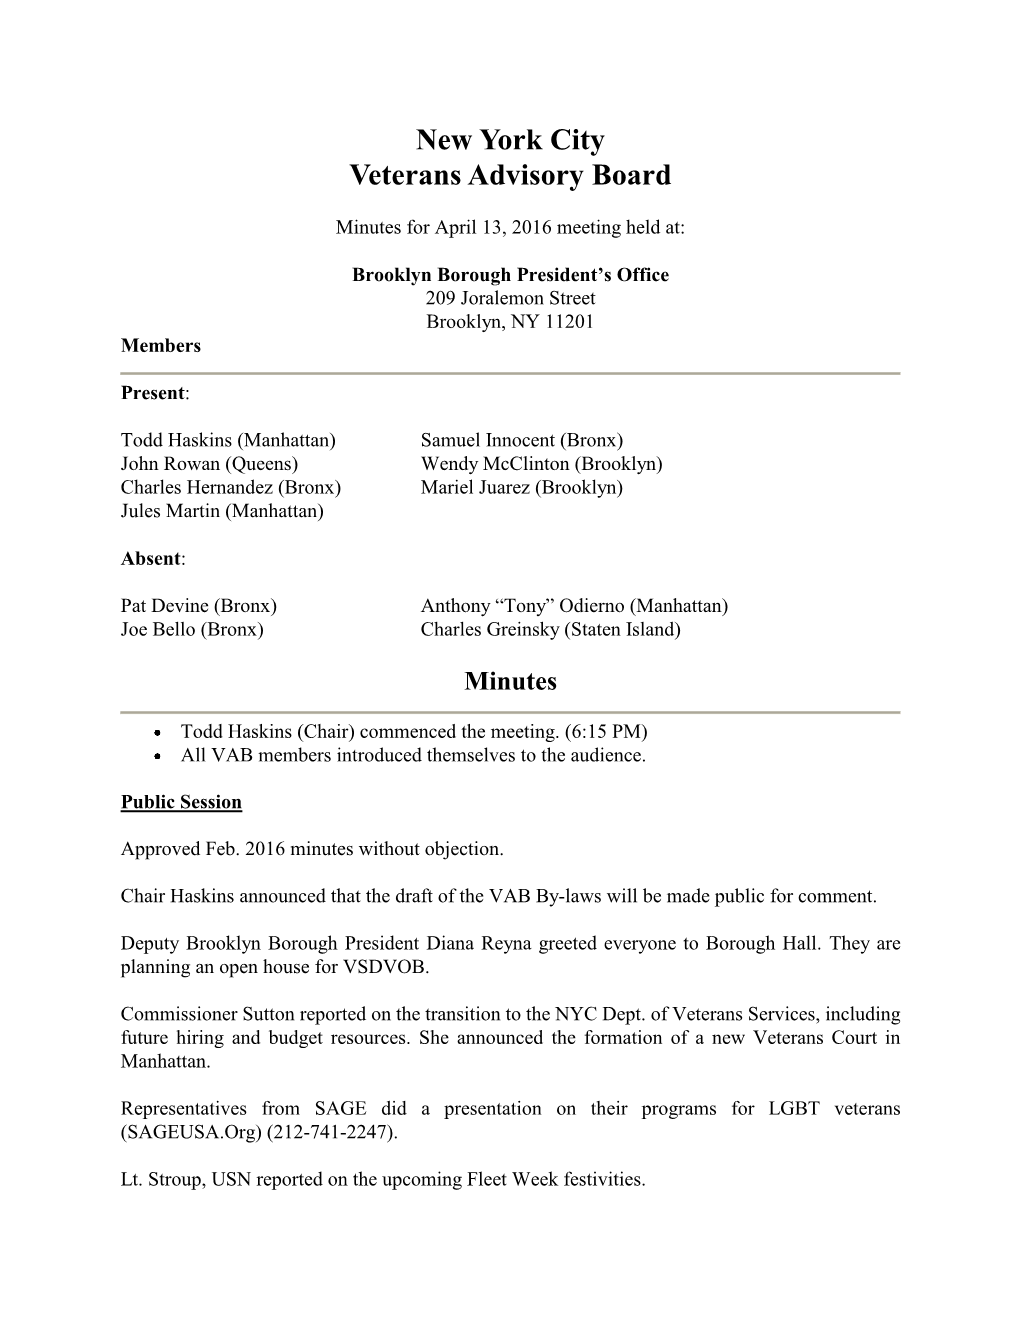 New York City Veterans Advisory Board